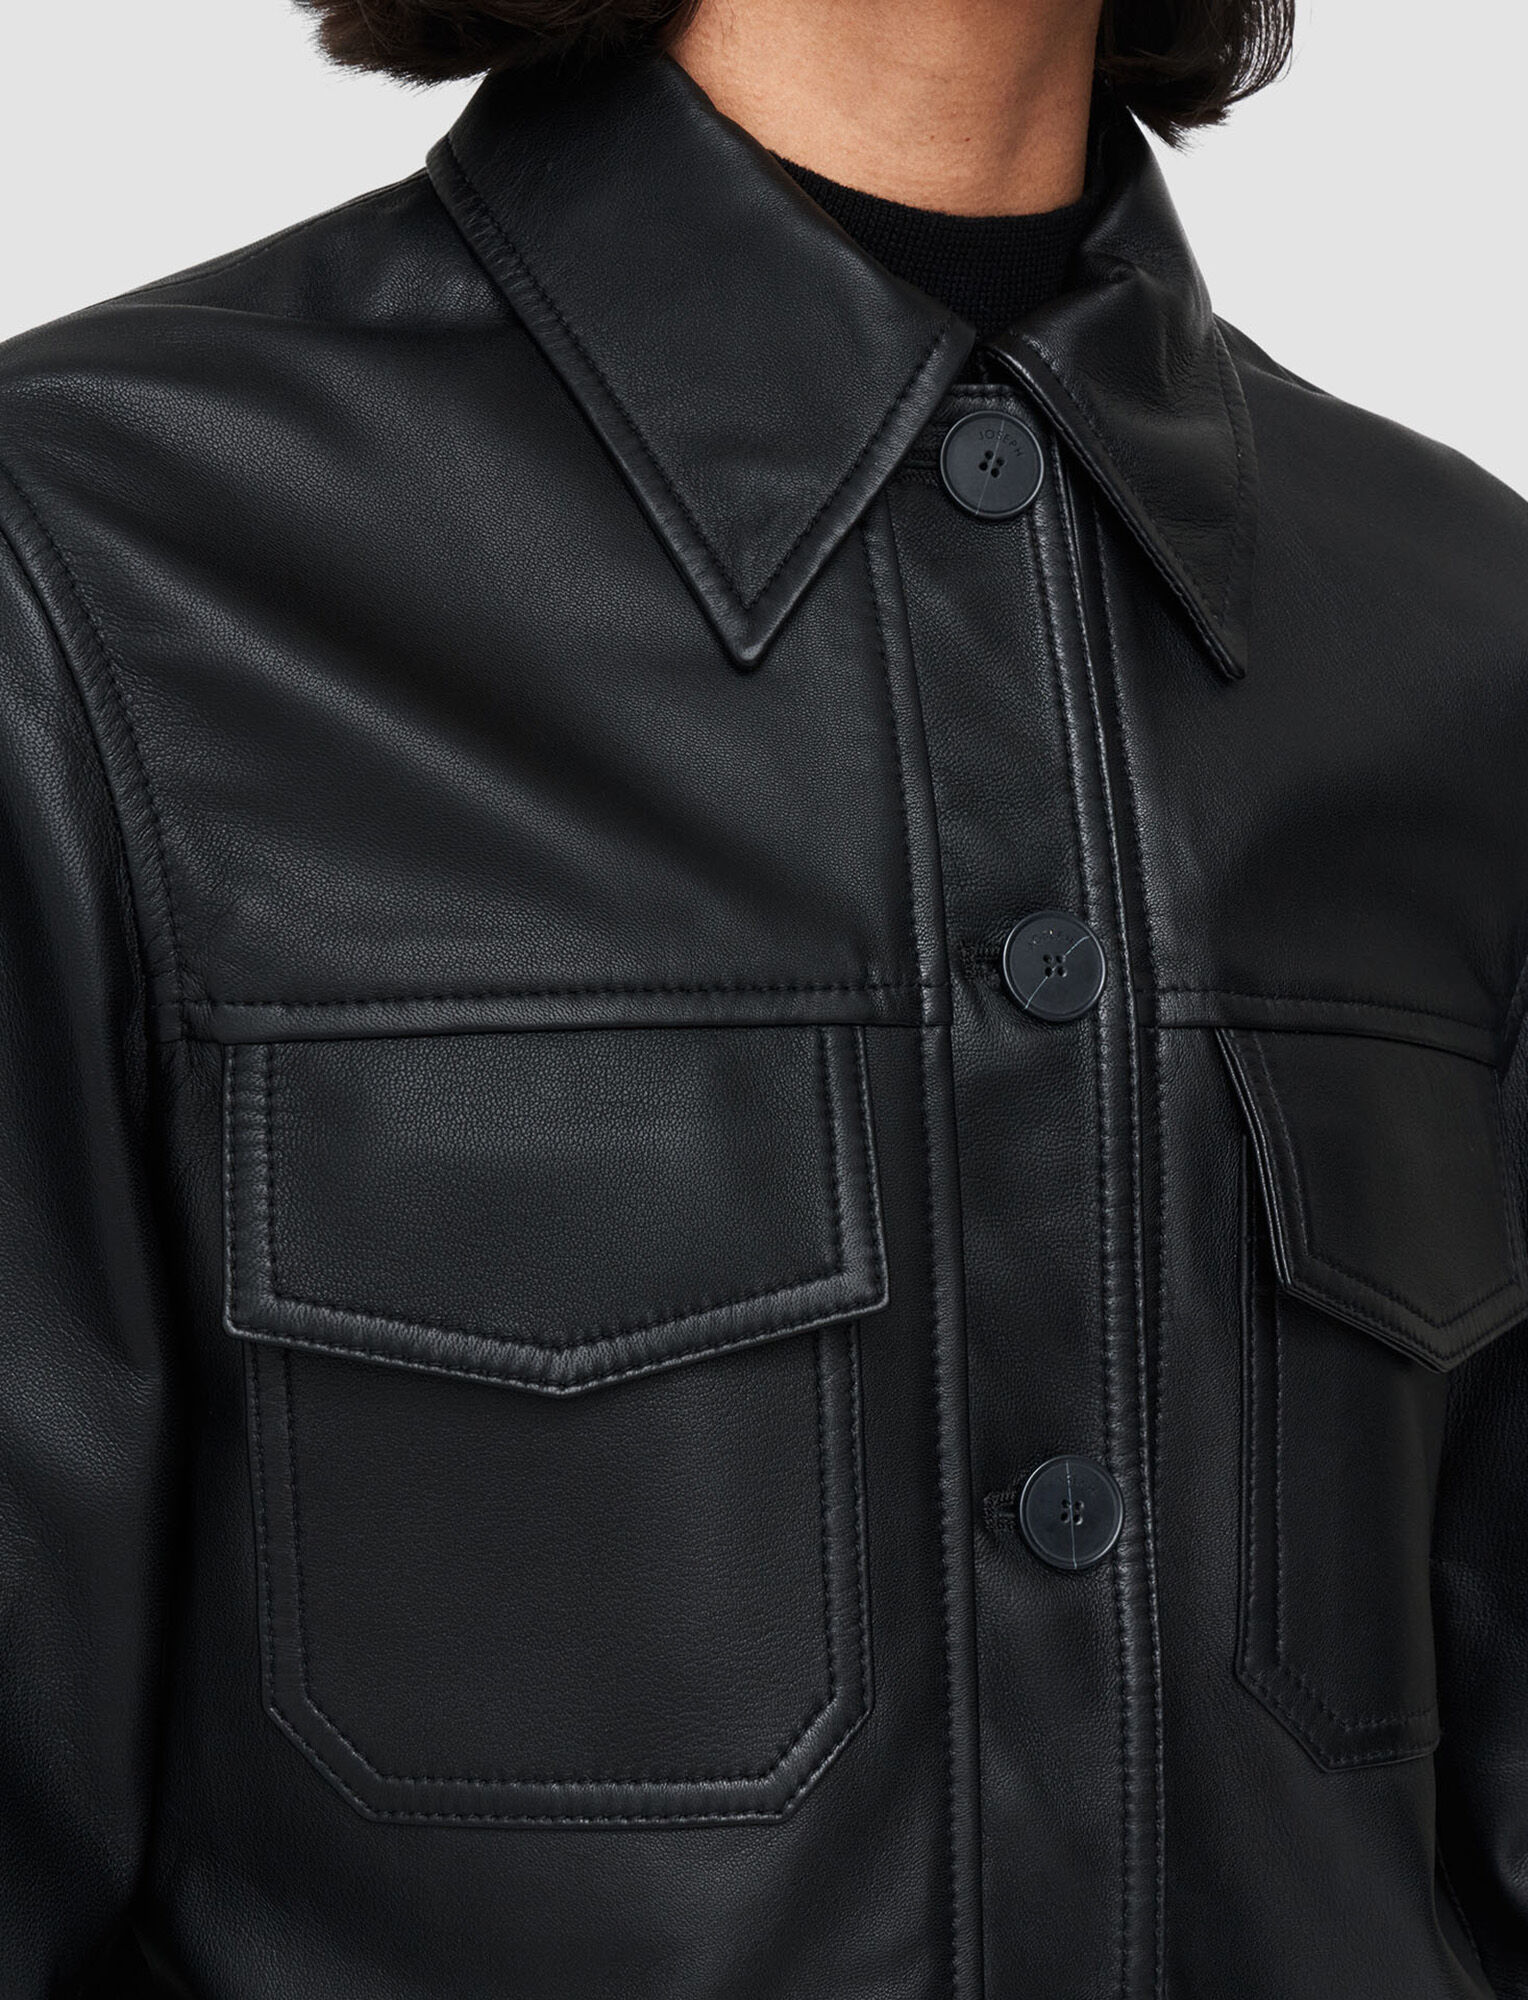 Joseph, Nappa Leather Granville Jacket, in Black